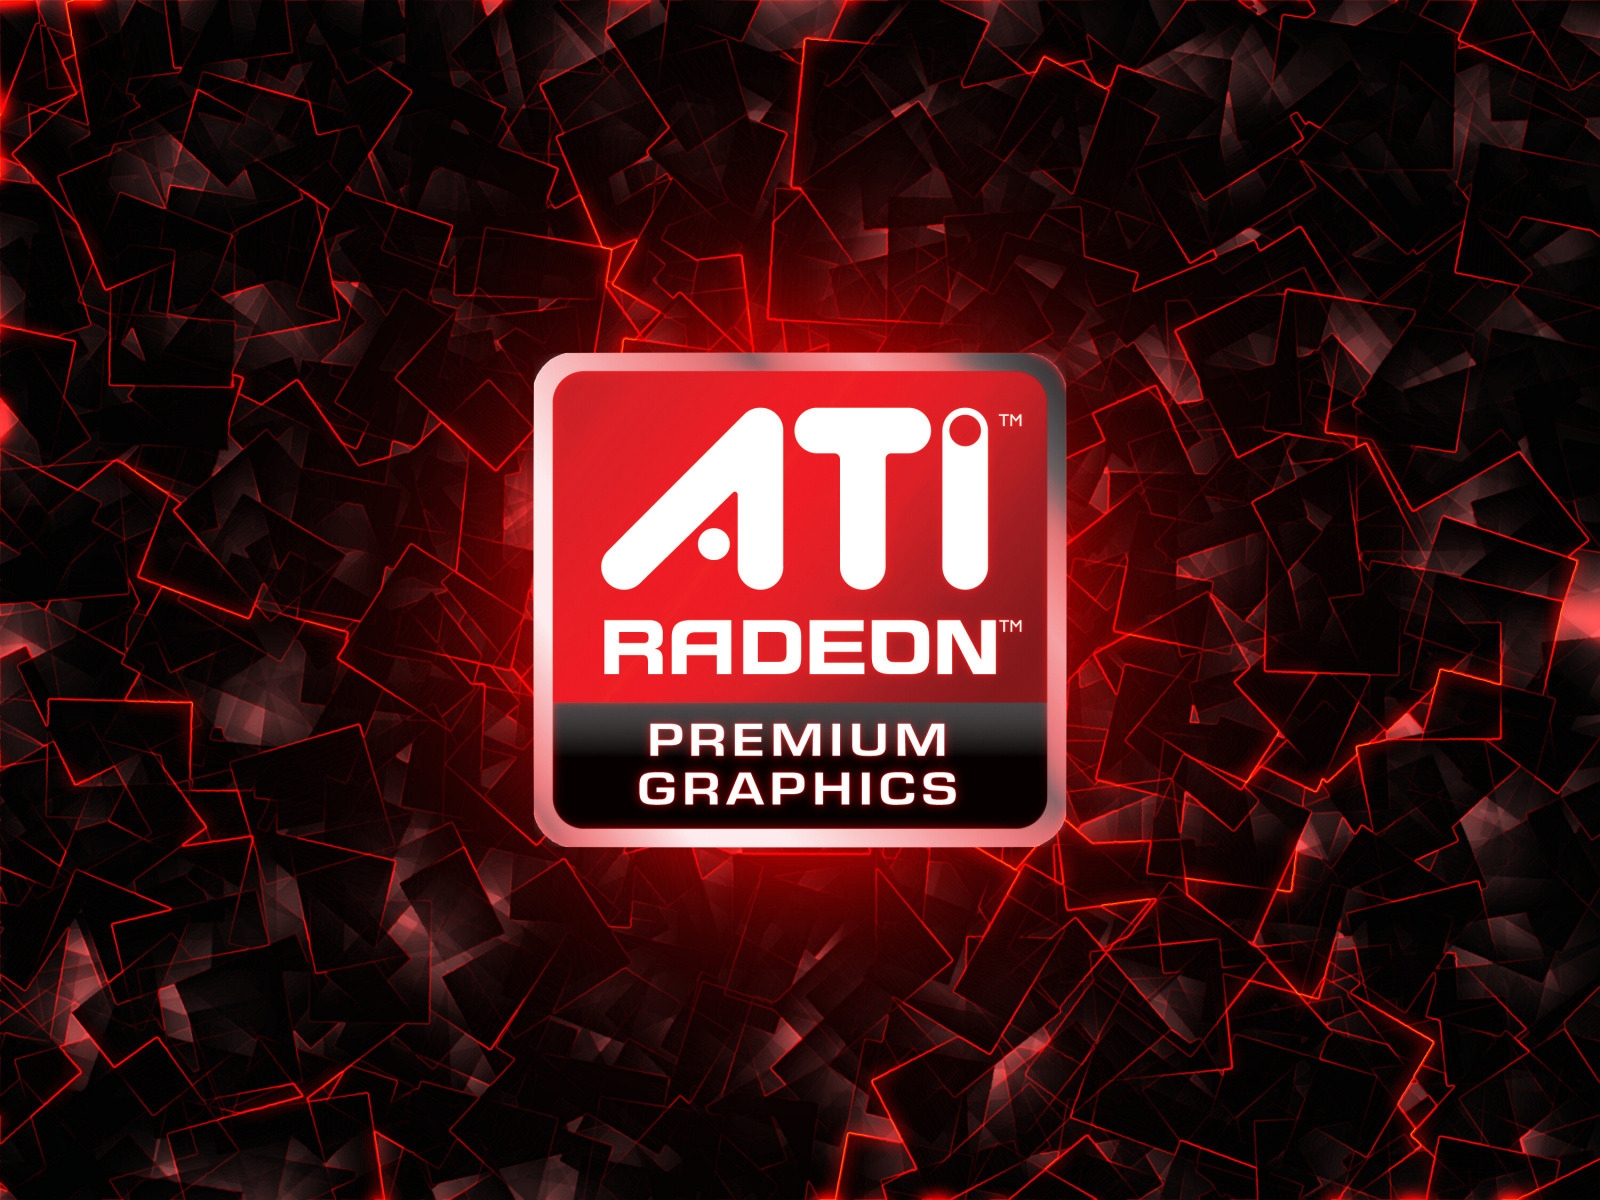 ATI Radeon Premium Graphics for 1600 x 1200 resolution